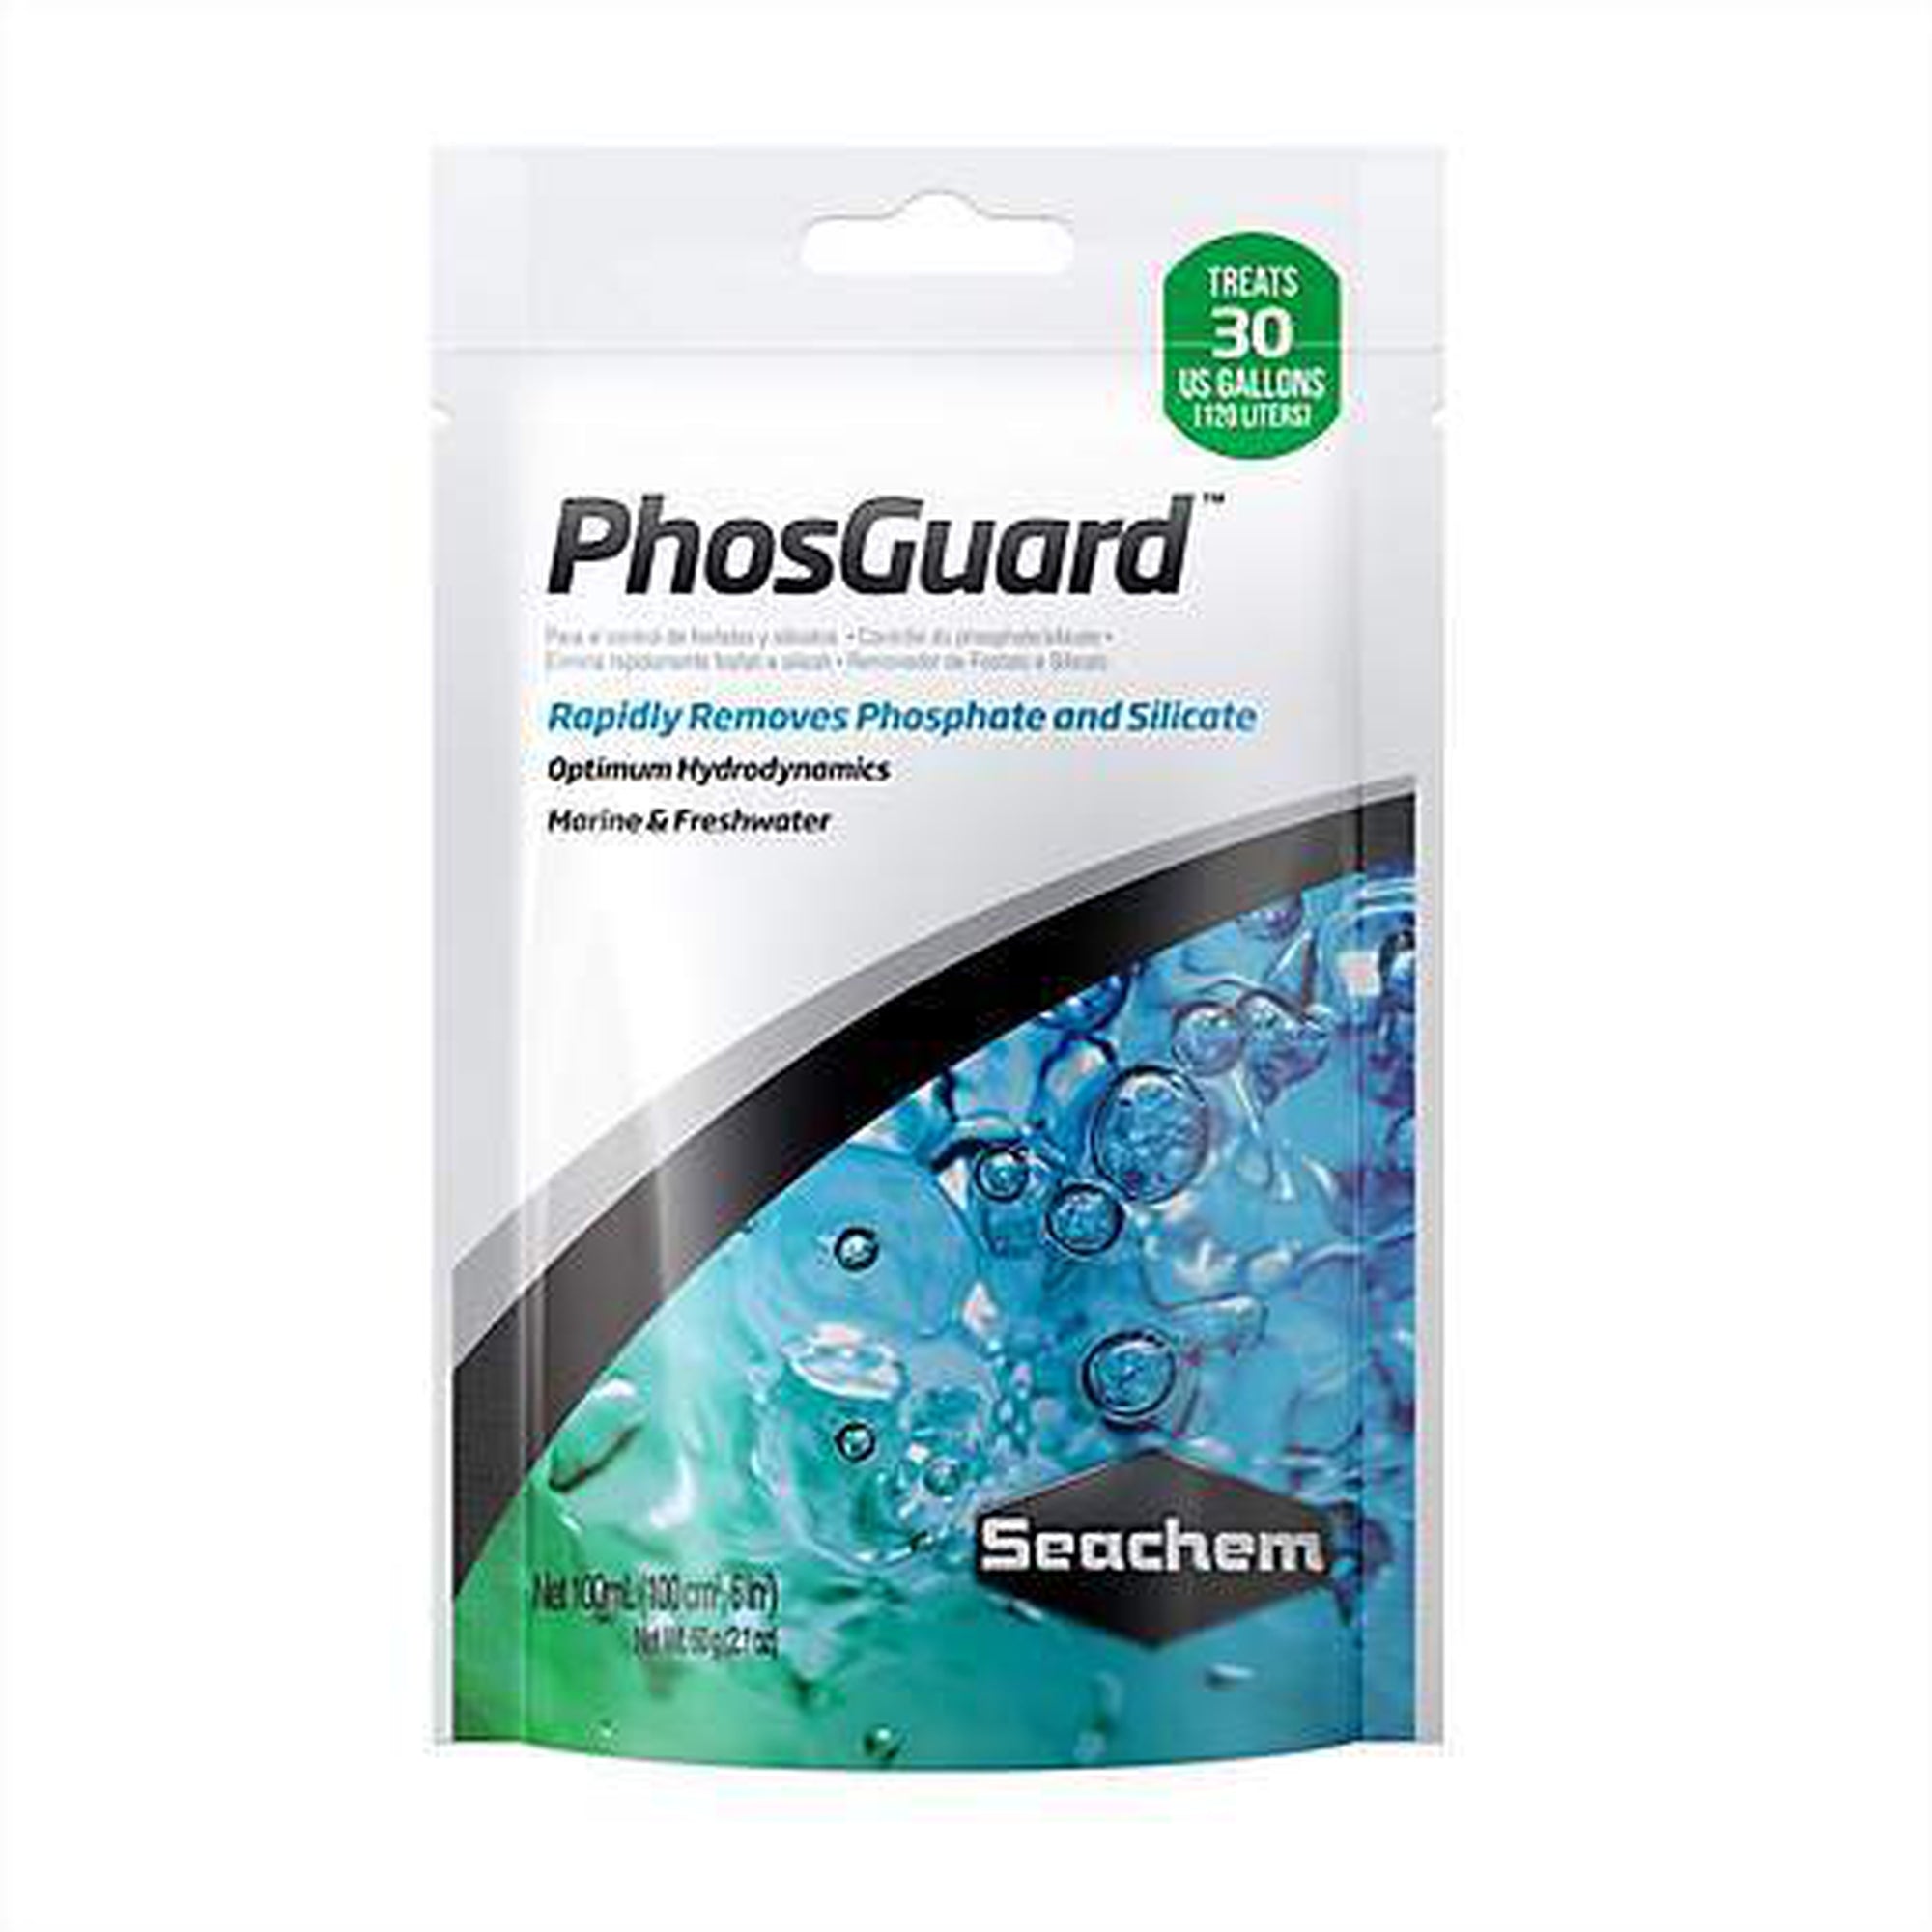 Seachem Phosguard